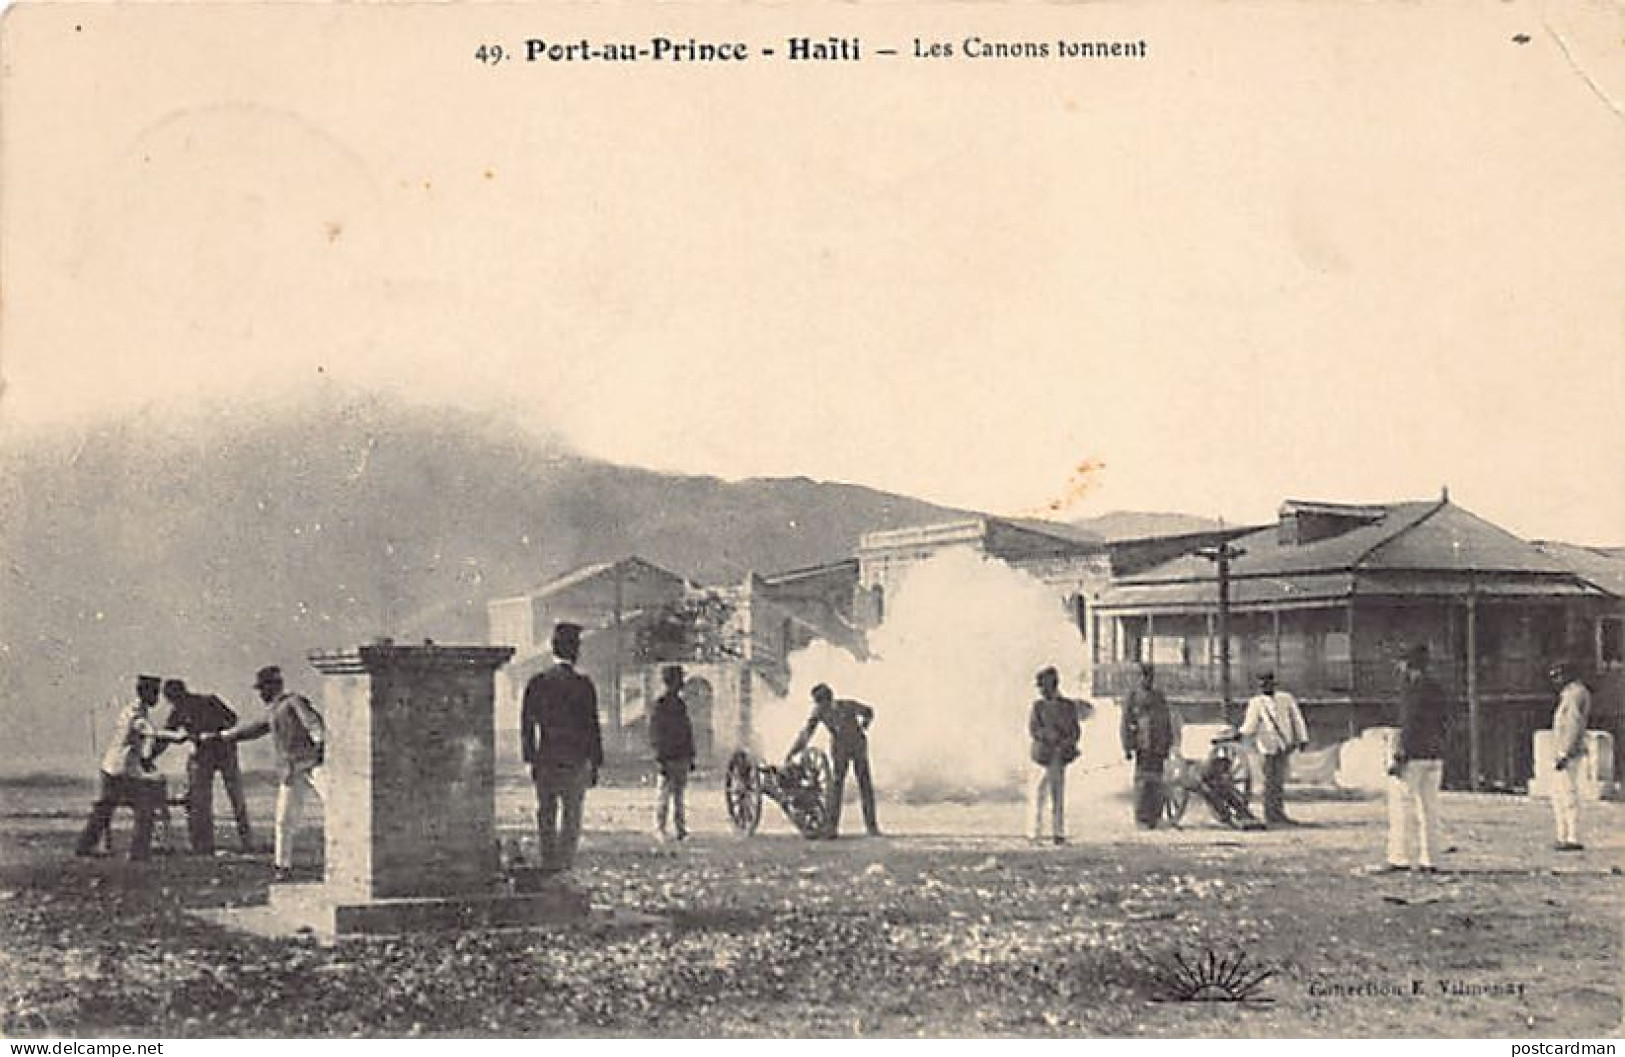 Haiti - PORT AU PRINCE - Les Canons Tonnent - Publ. E. Vilmenay 49 - Haïti